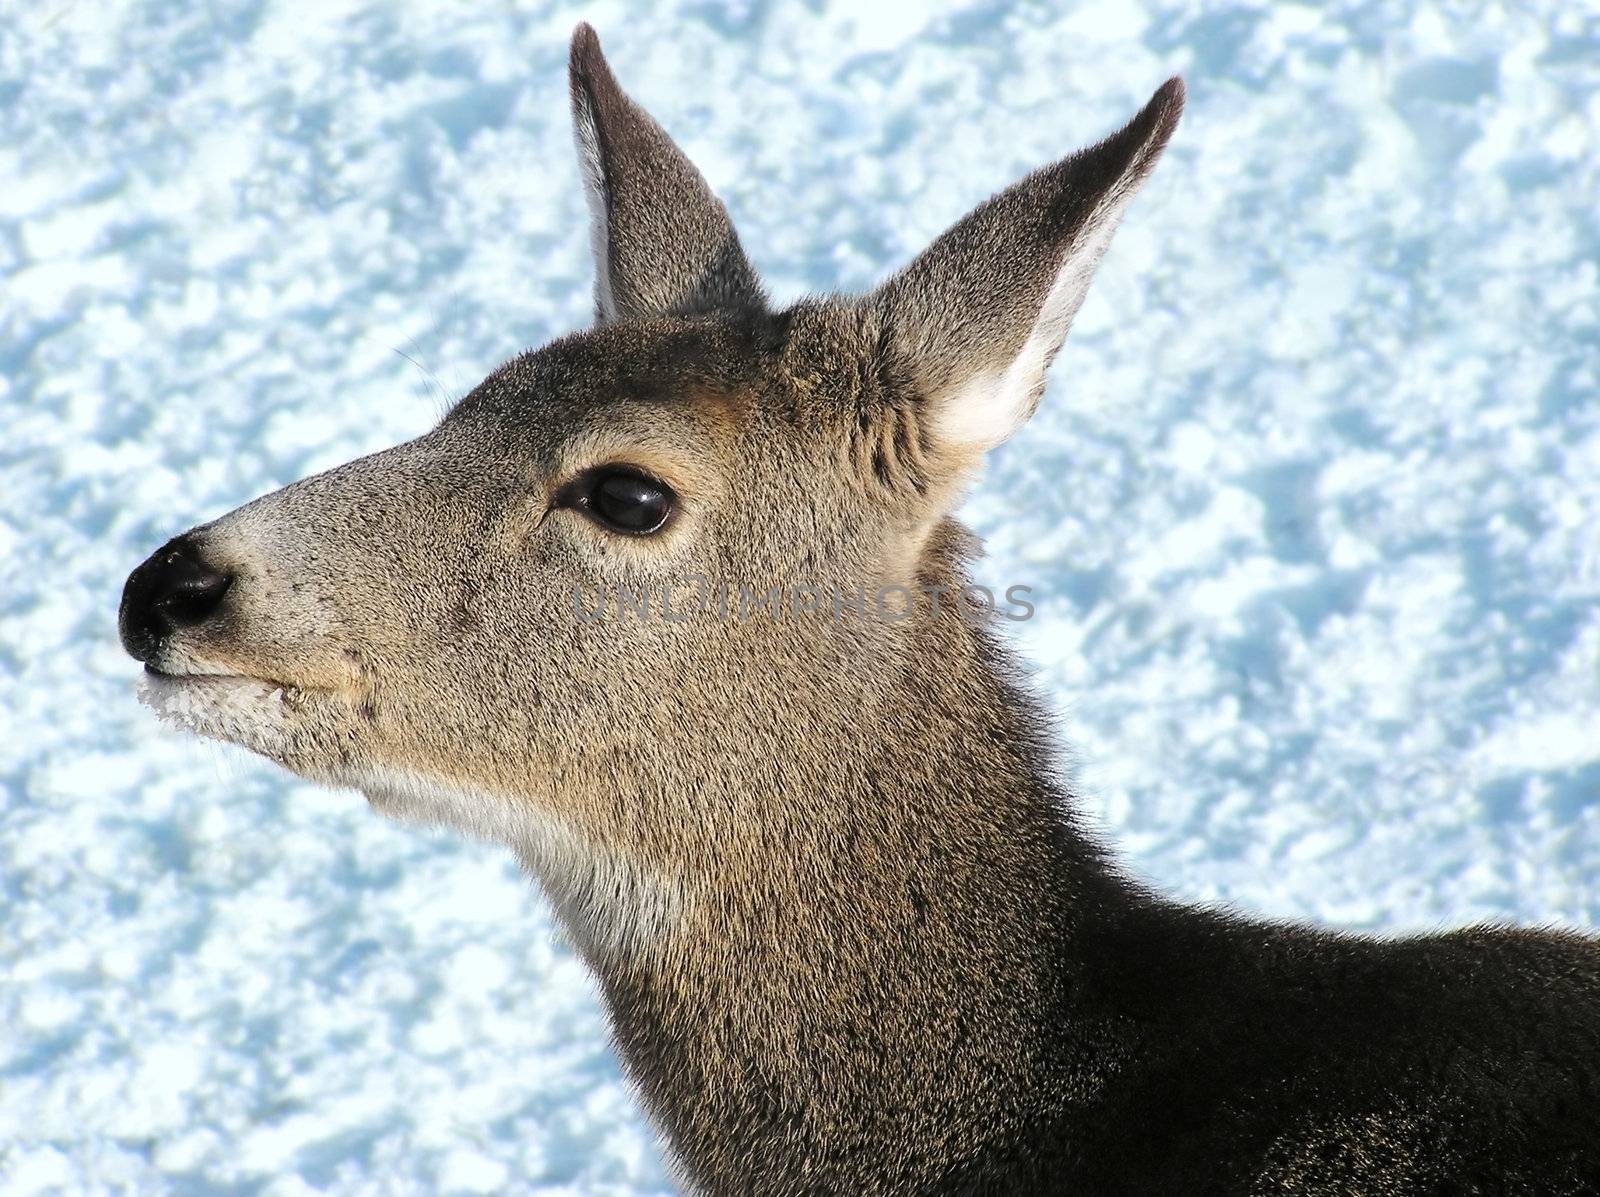 Long eared mule deer doe profile close up during winter time. Dreat fur details.